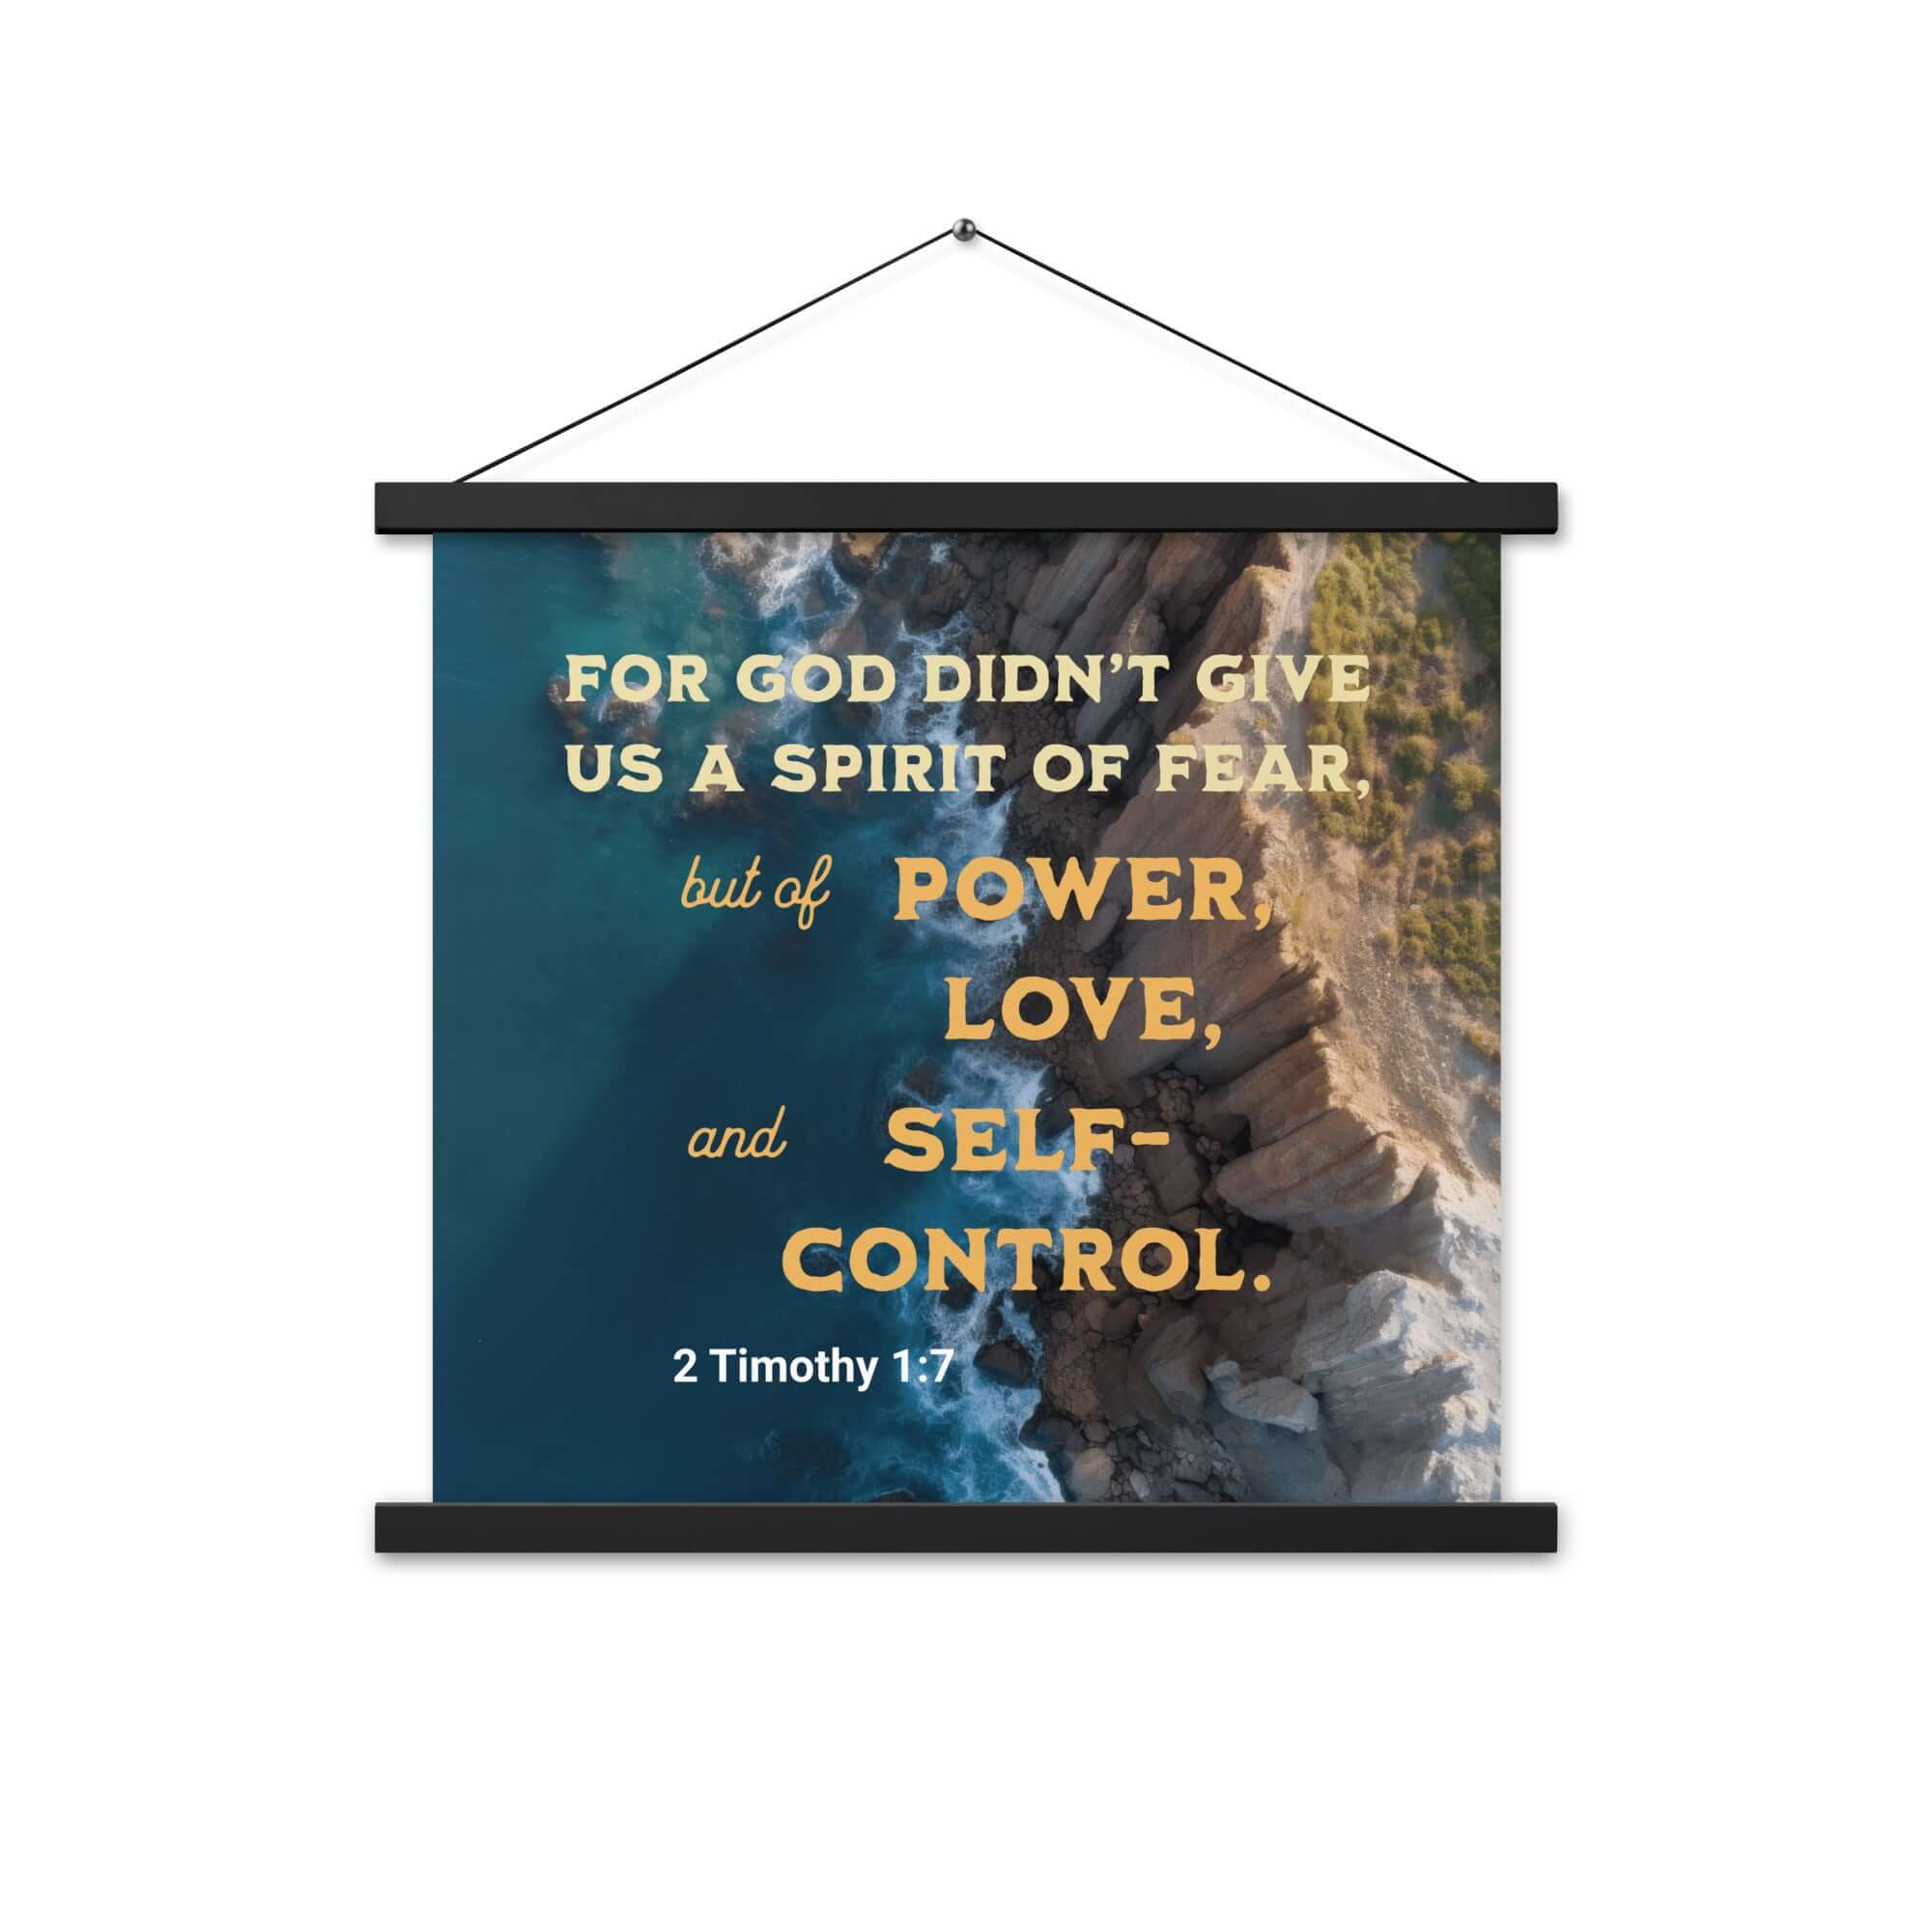 2 Tim 1:7 - Bible Verse, Power, Love, Self-Control Hanger Poster